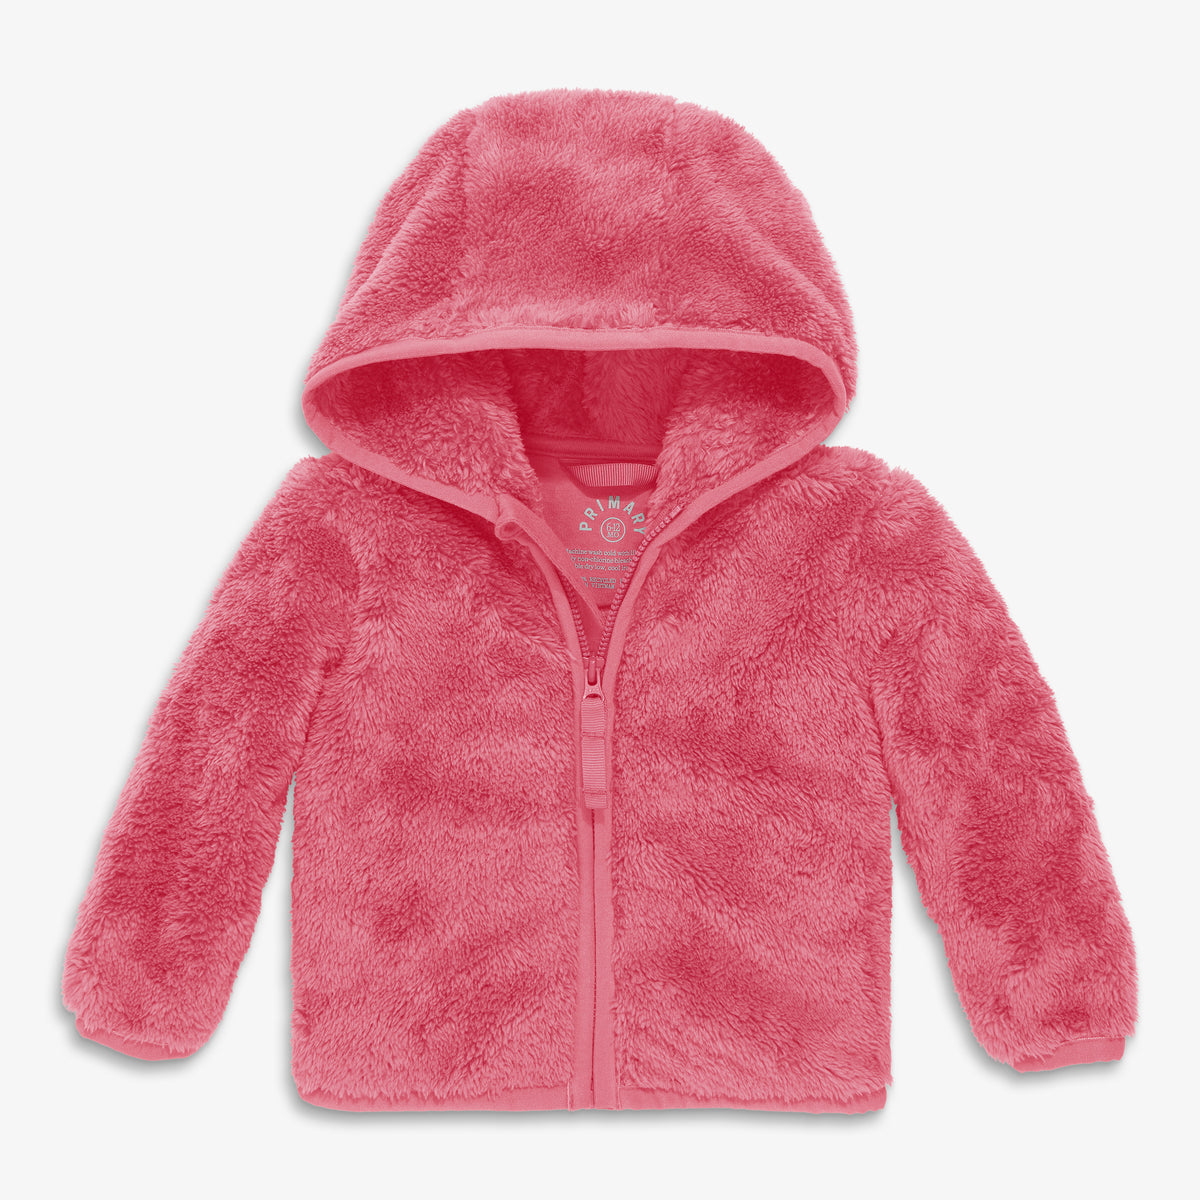 Baby teddy fleece jacket | Primary.com